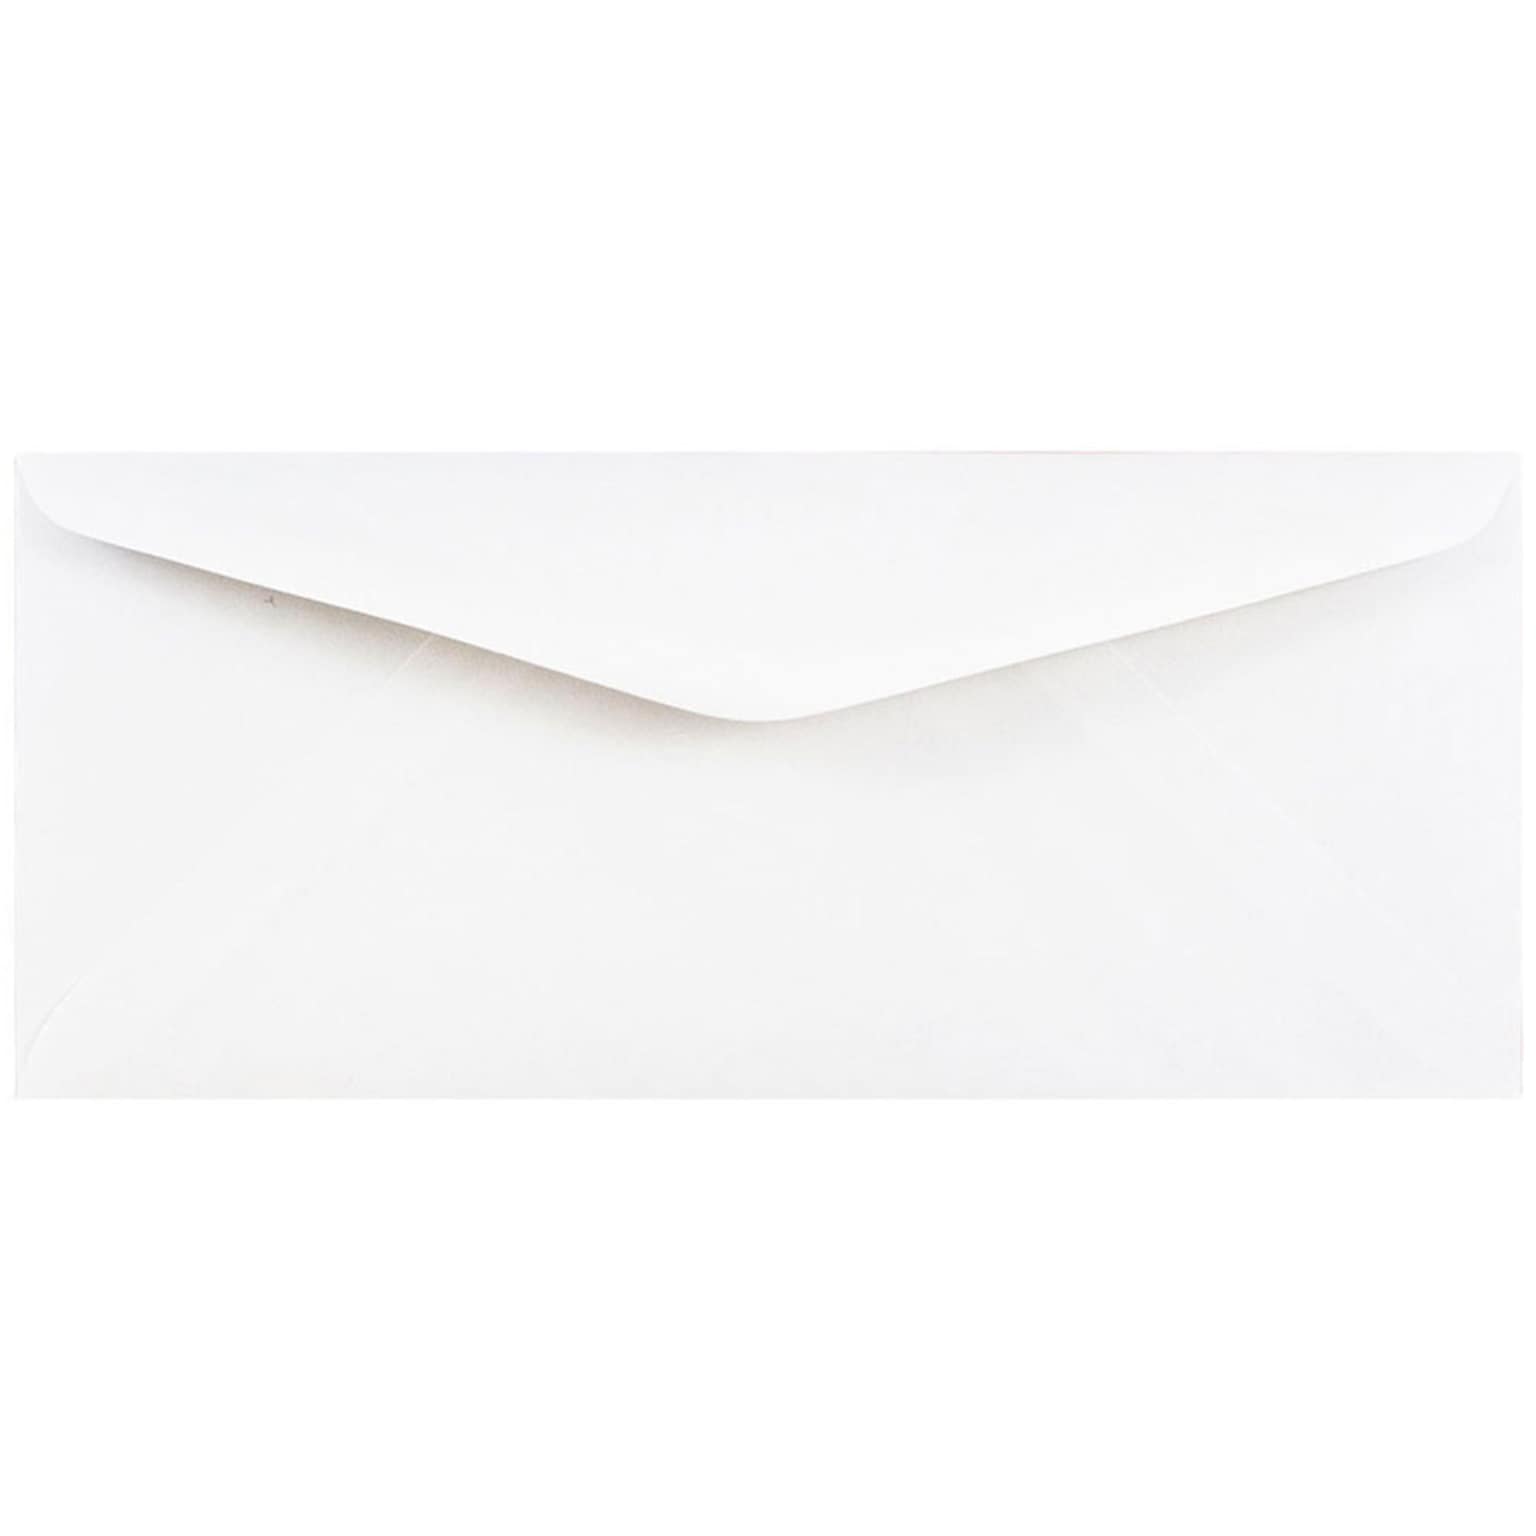 JAM Paper #11 Business Envelope, 4 1/2 x 10 3/8, White, 1000/Carton (45179B)